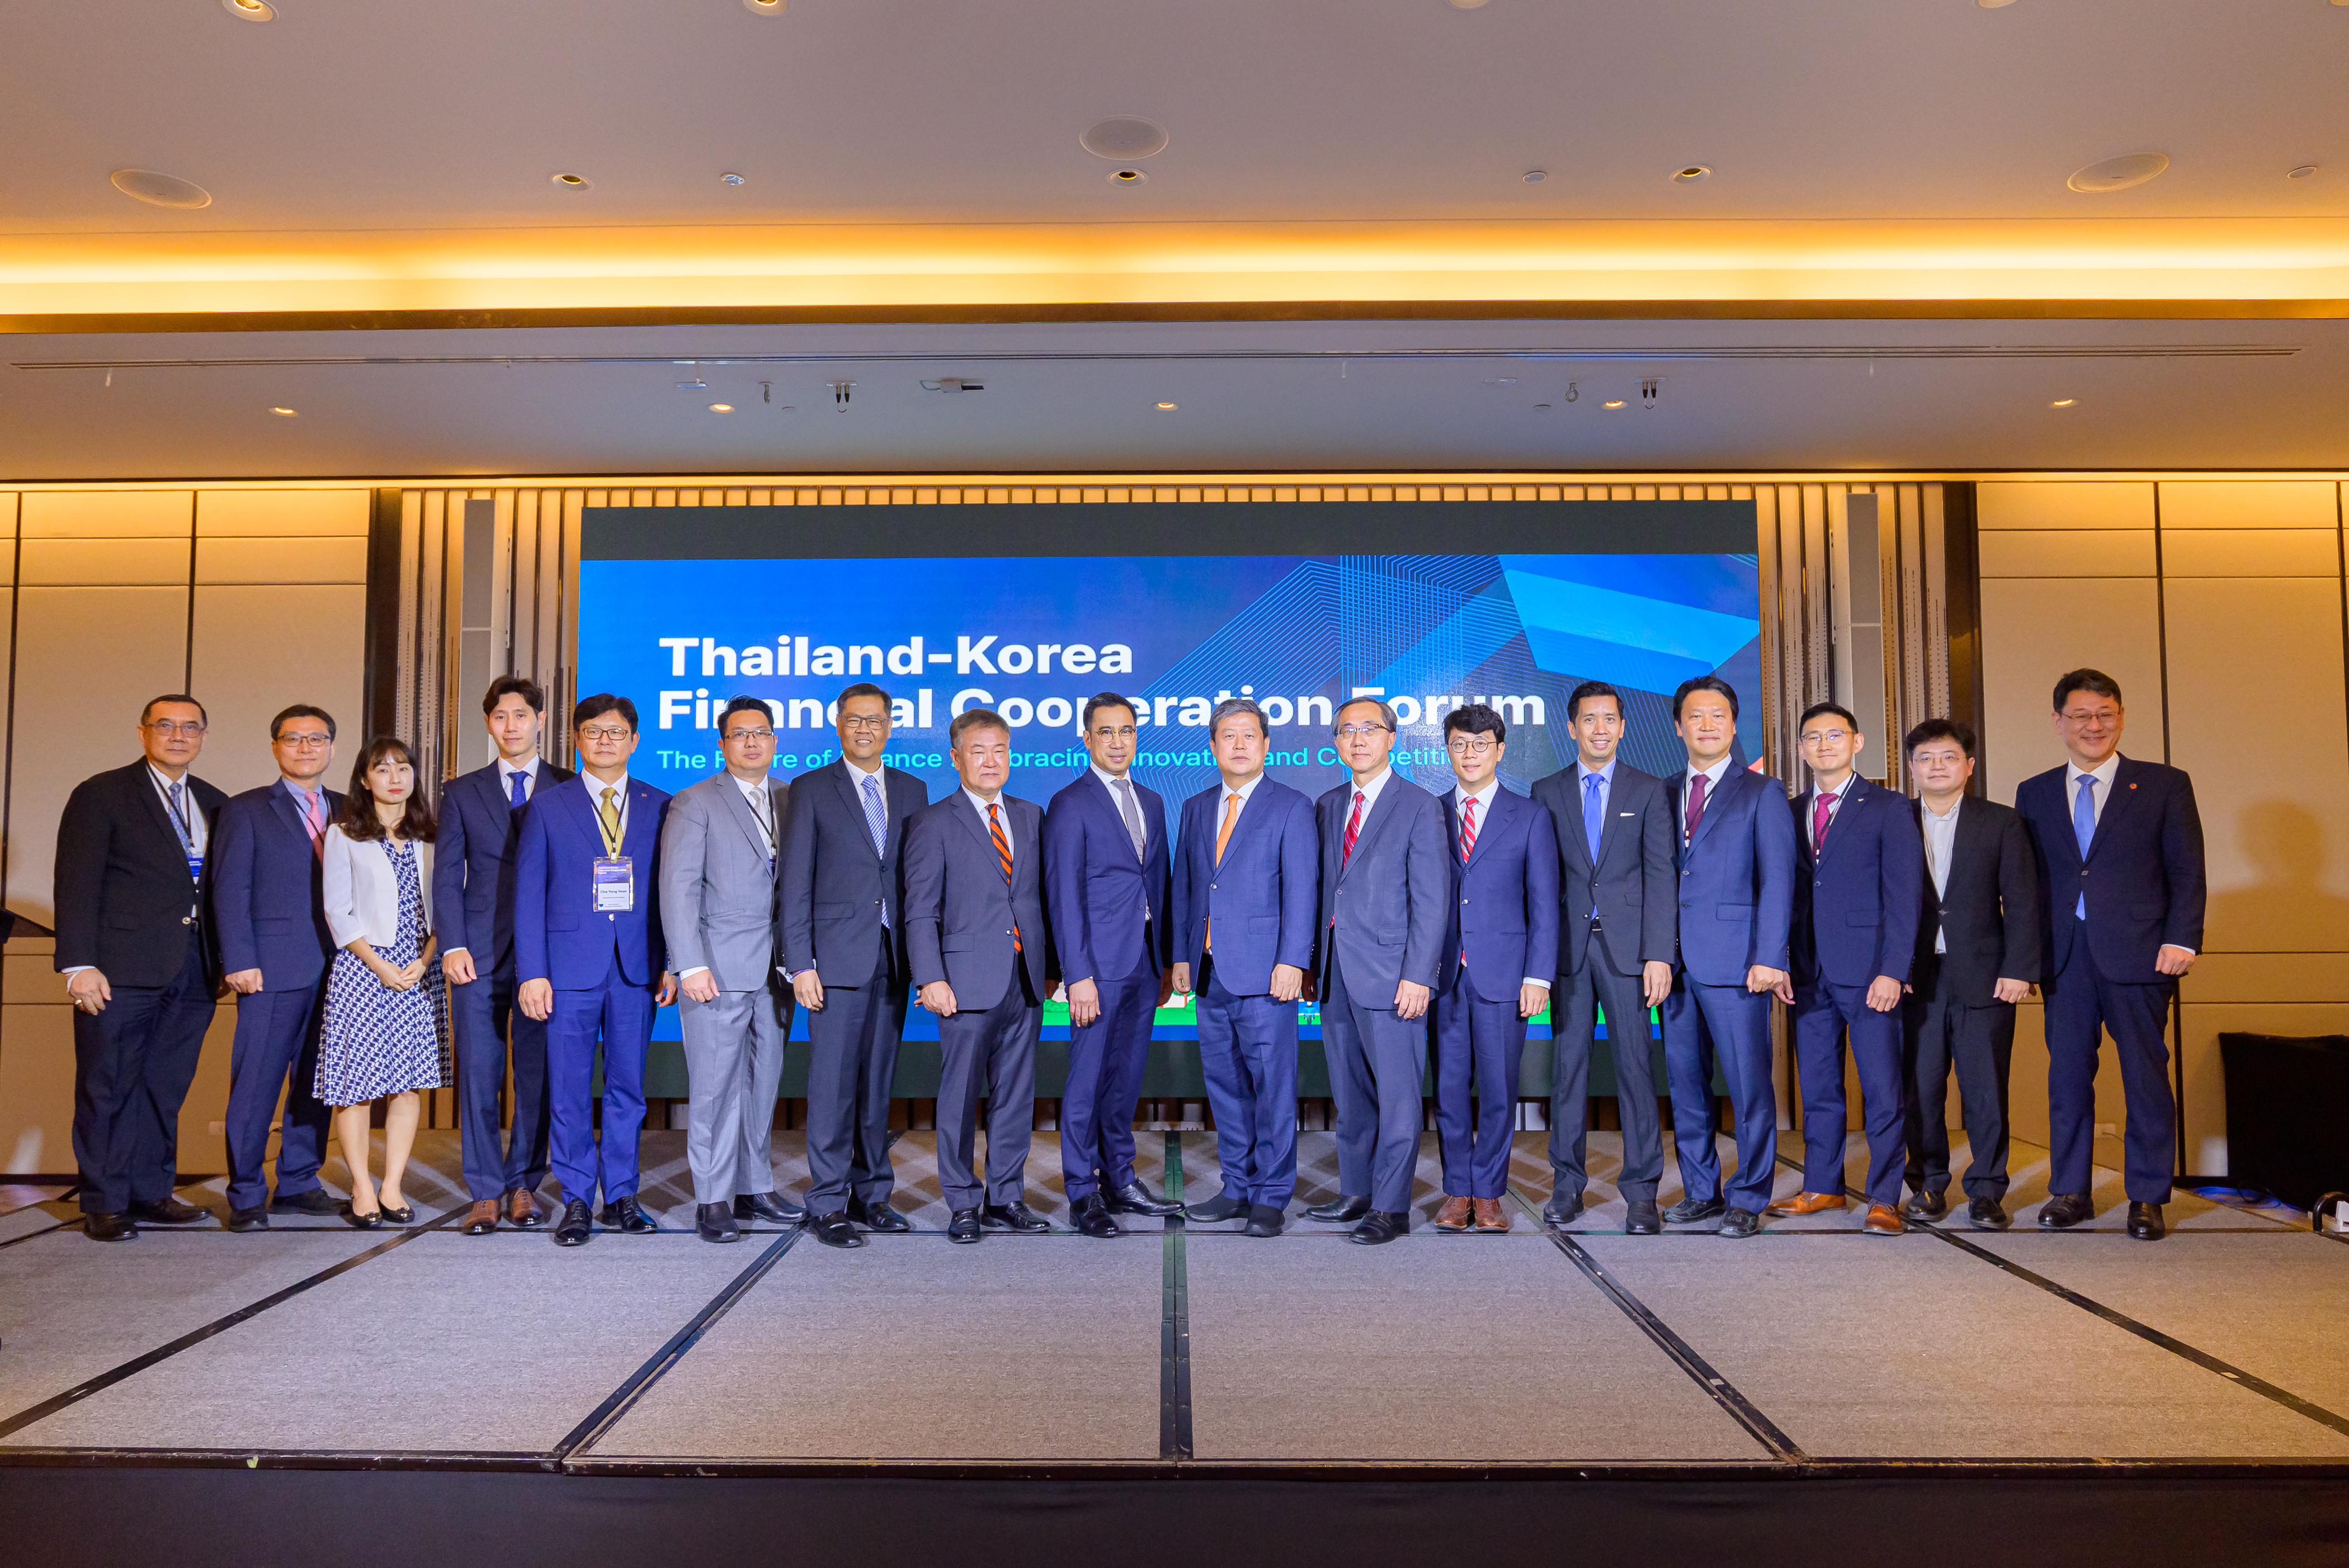 Thailand-Korea Financial Cooperation Forum